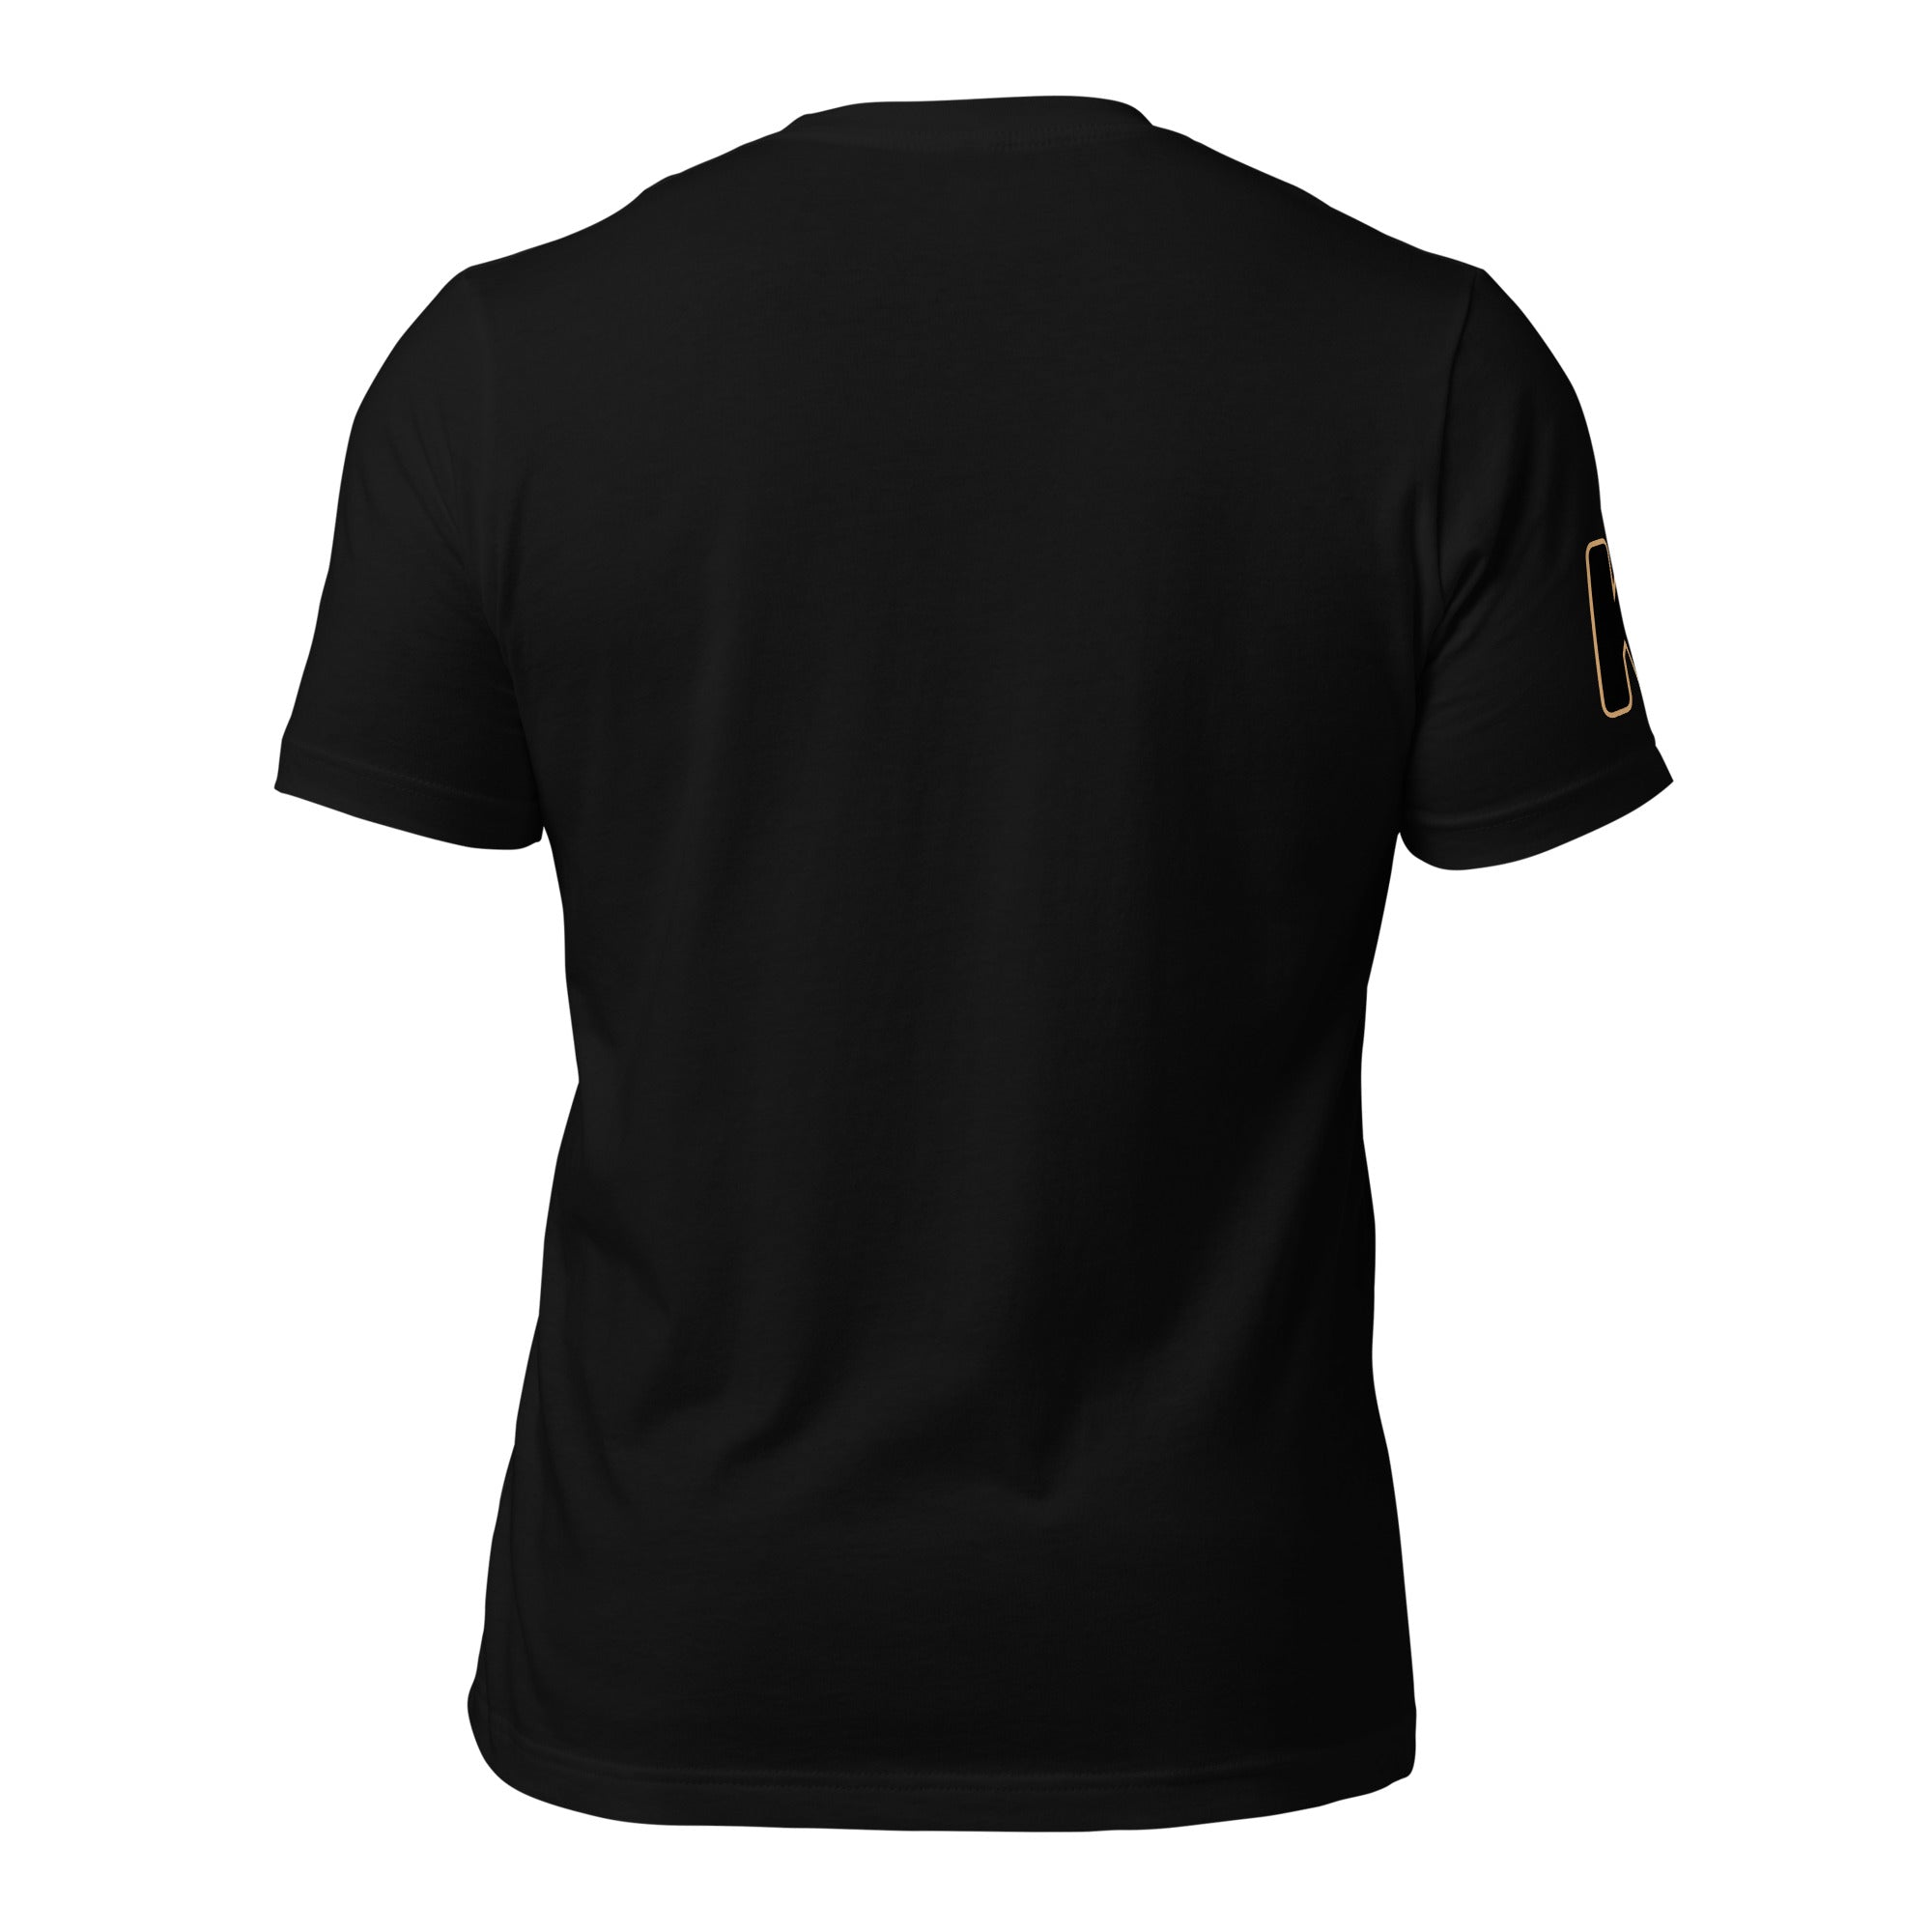 Unisex Crew Neck T-Shirt - Vintage Hip Hop Series v.2 - GRAPHIC T-SHIRTS